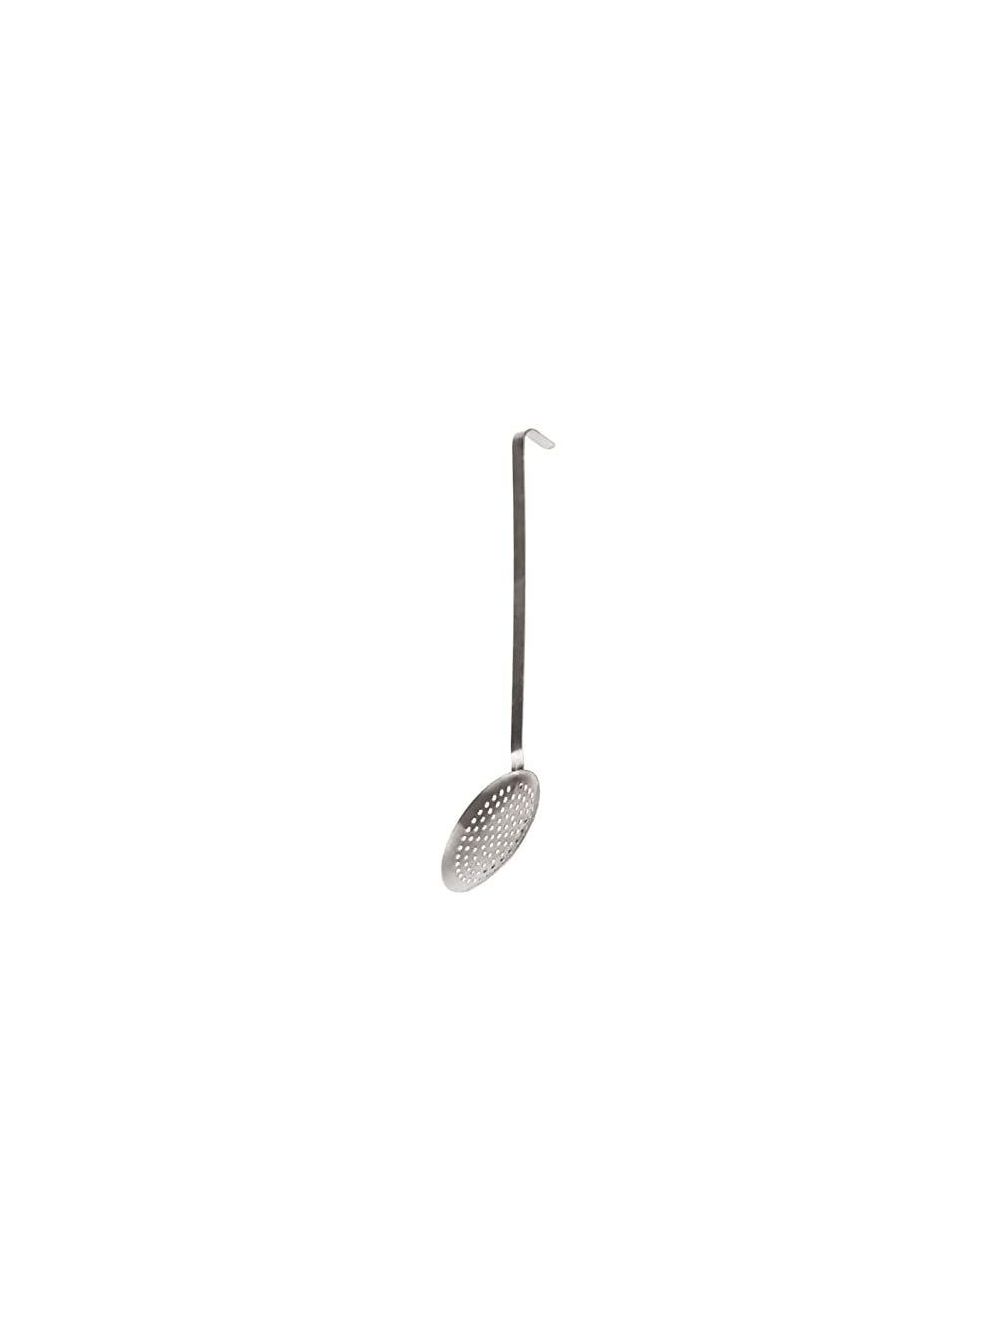 Raj Professional Skimmer Spoon, Silver, 42.5 cm, RPS002